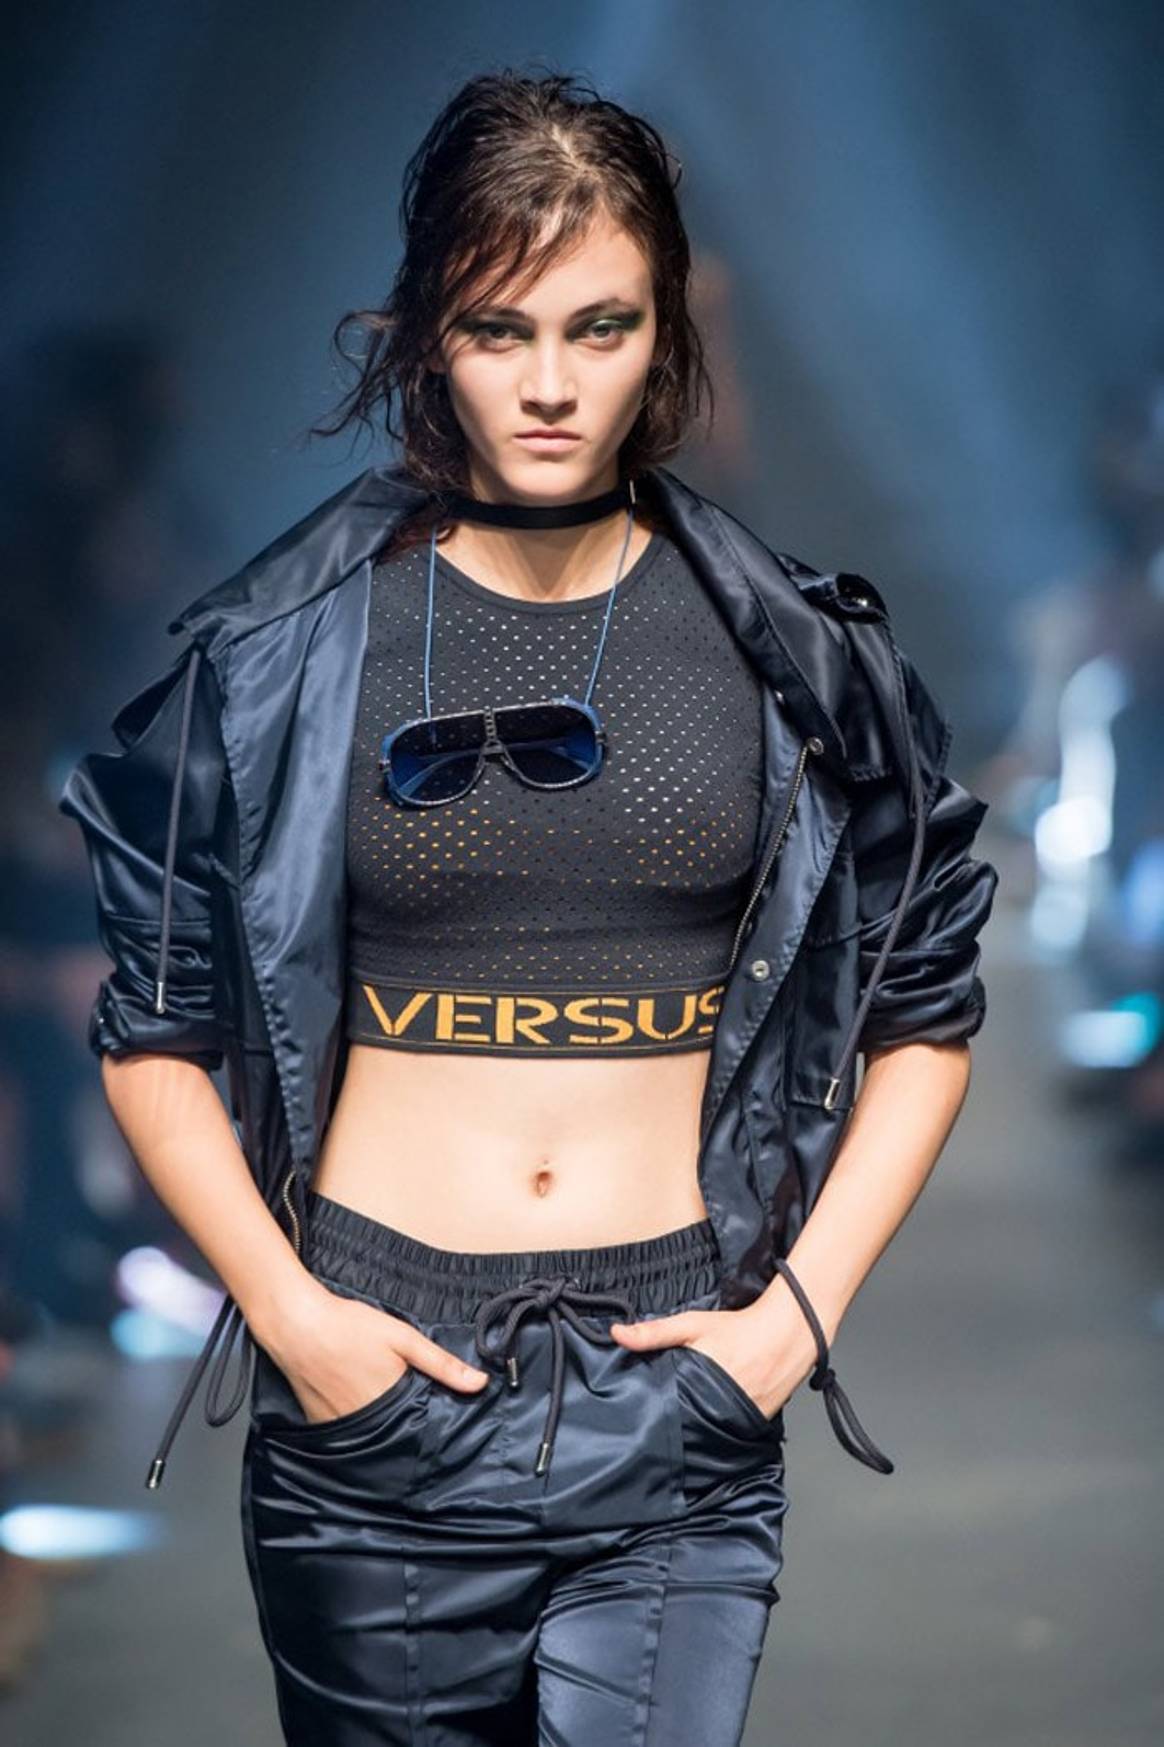 Versace's Versus brings swagger to London Fashion Week